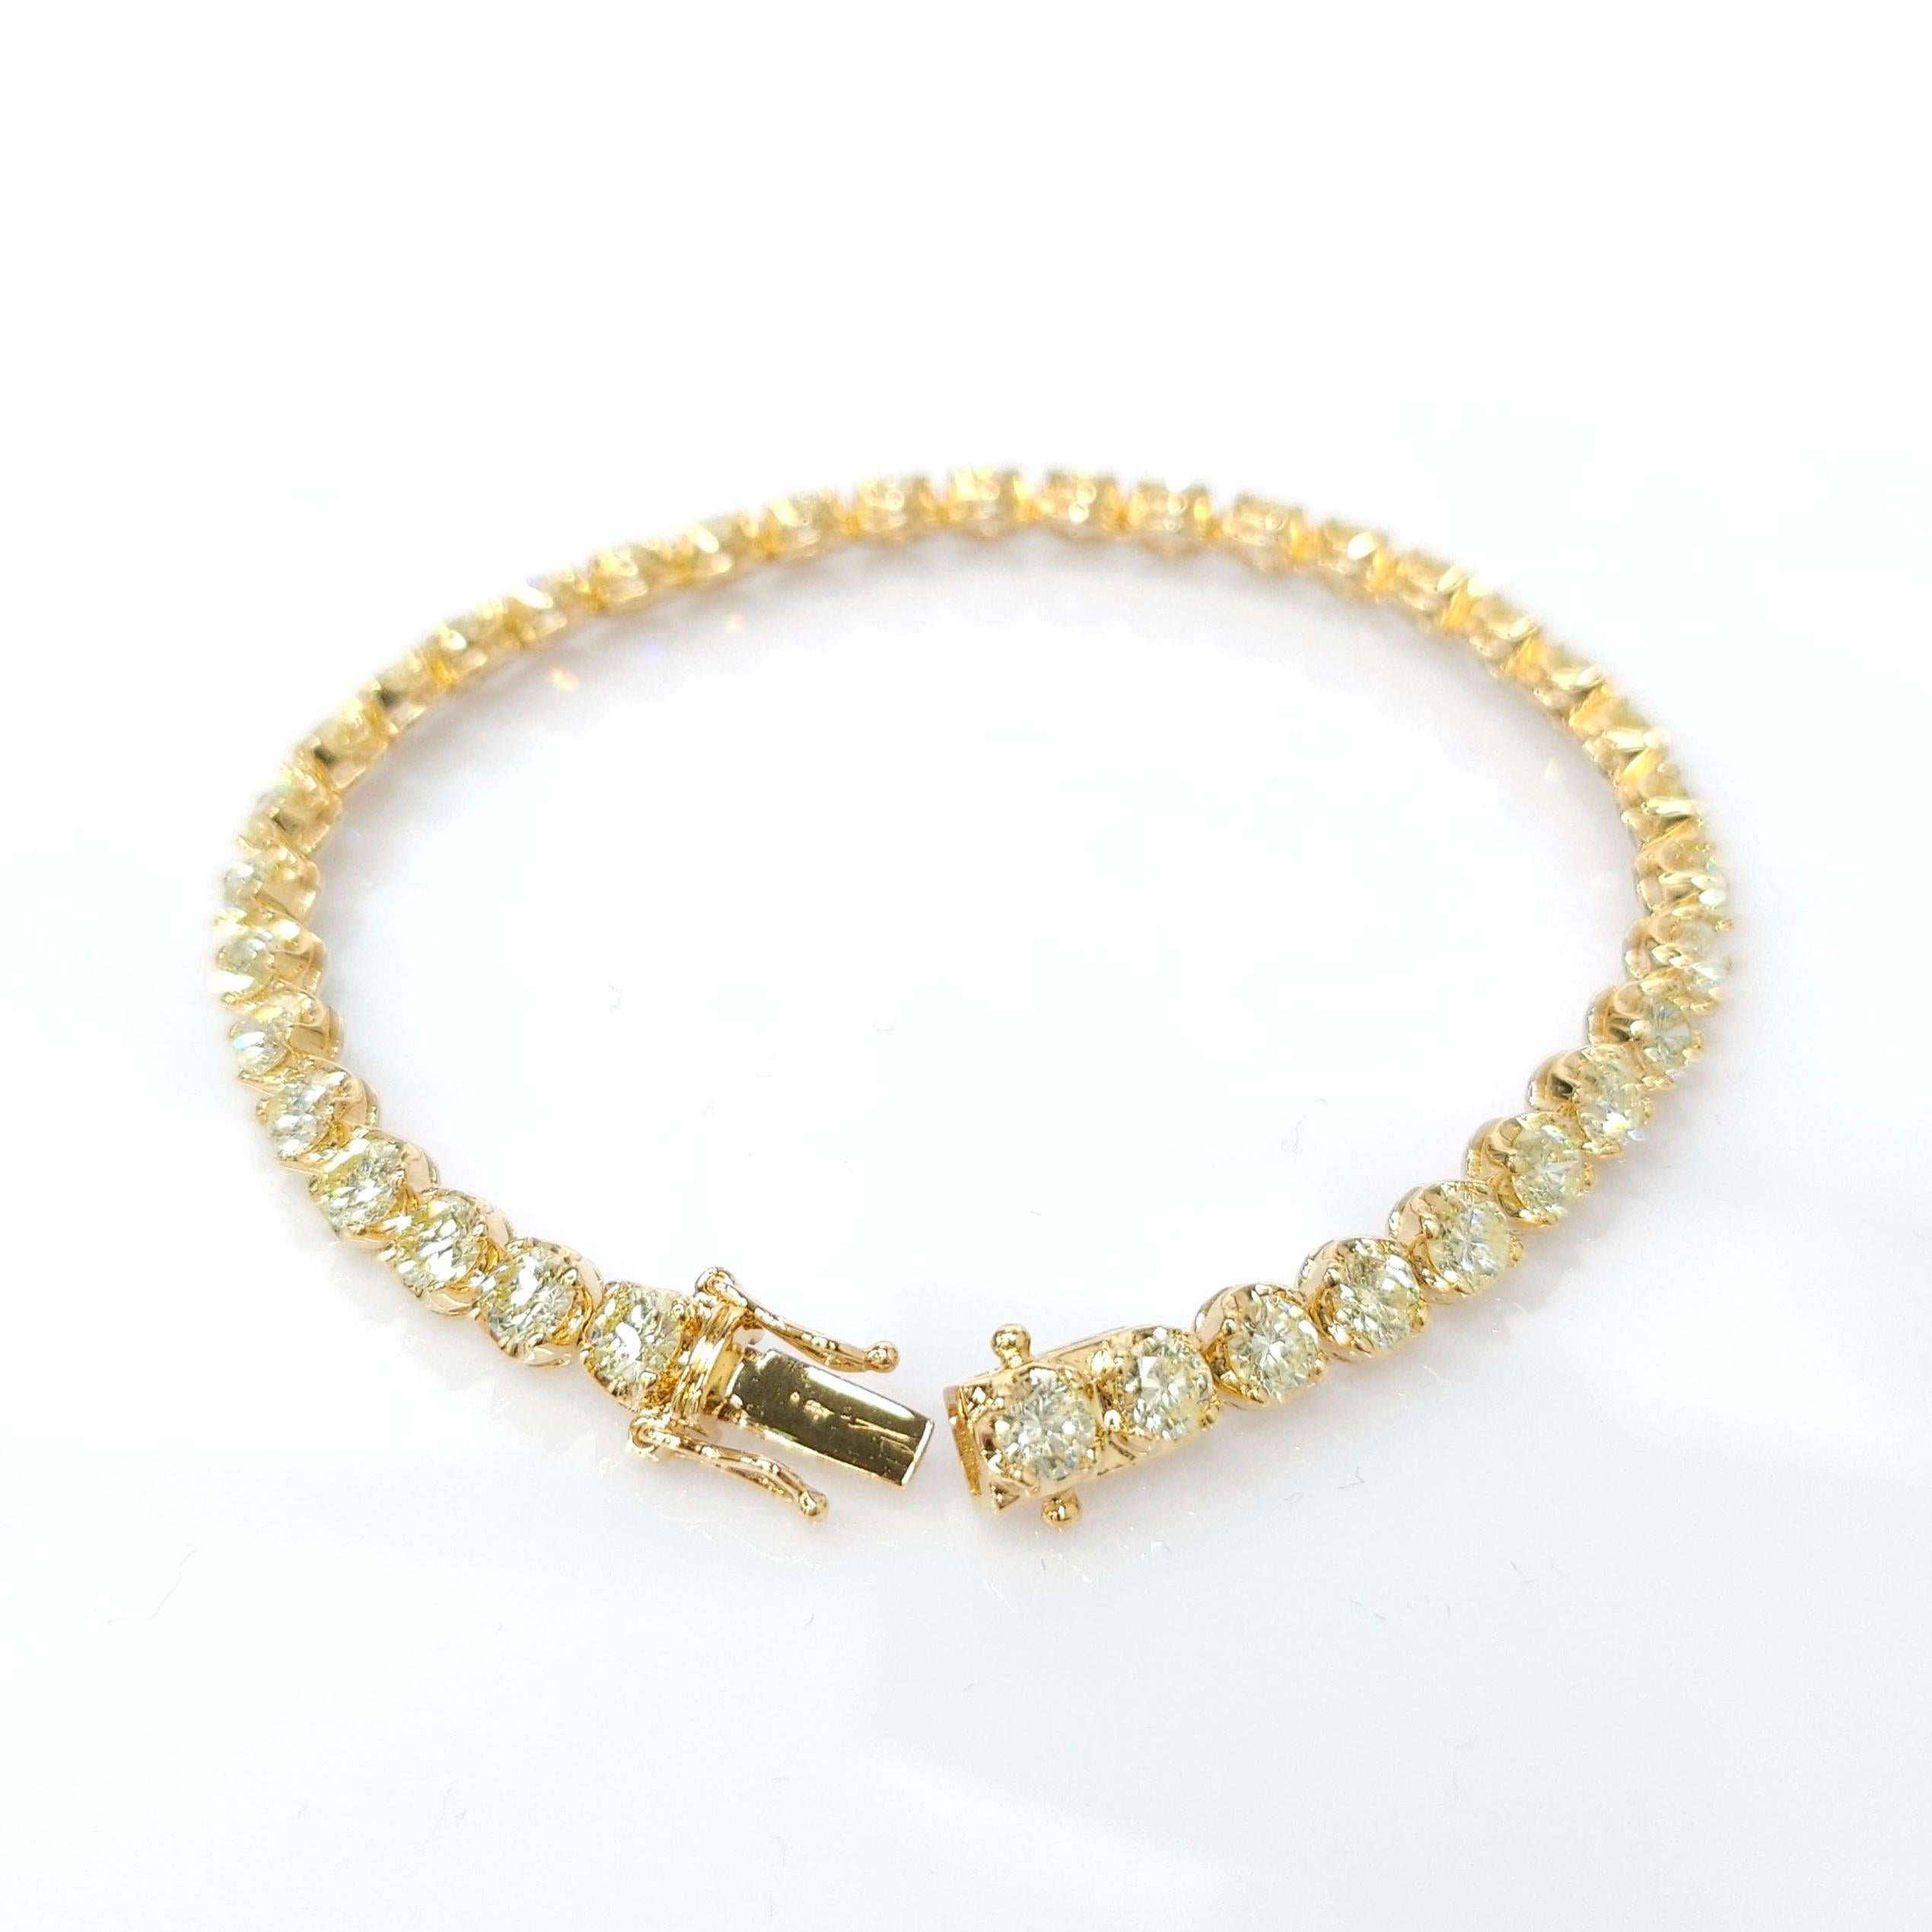 6.56 Carat Round Diamond Tennis Bracelet in 18K Yellow Gold For Sale 1